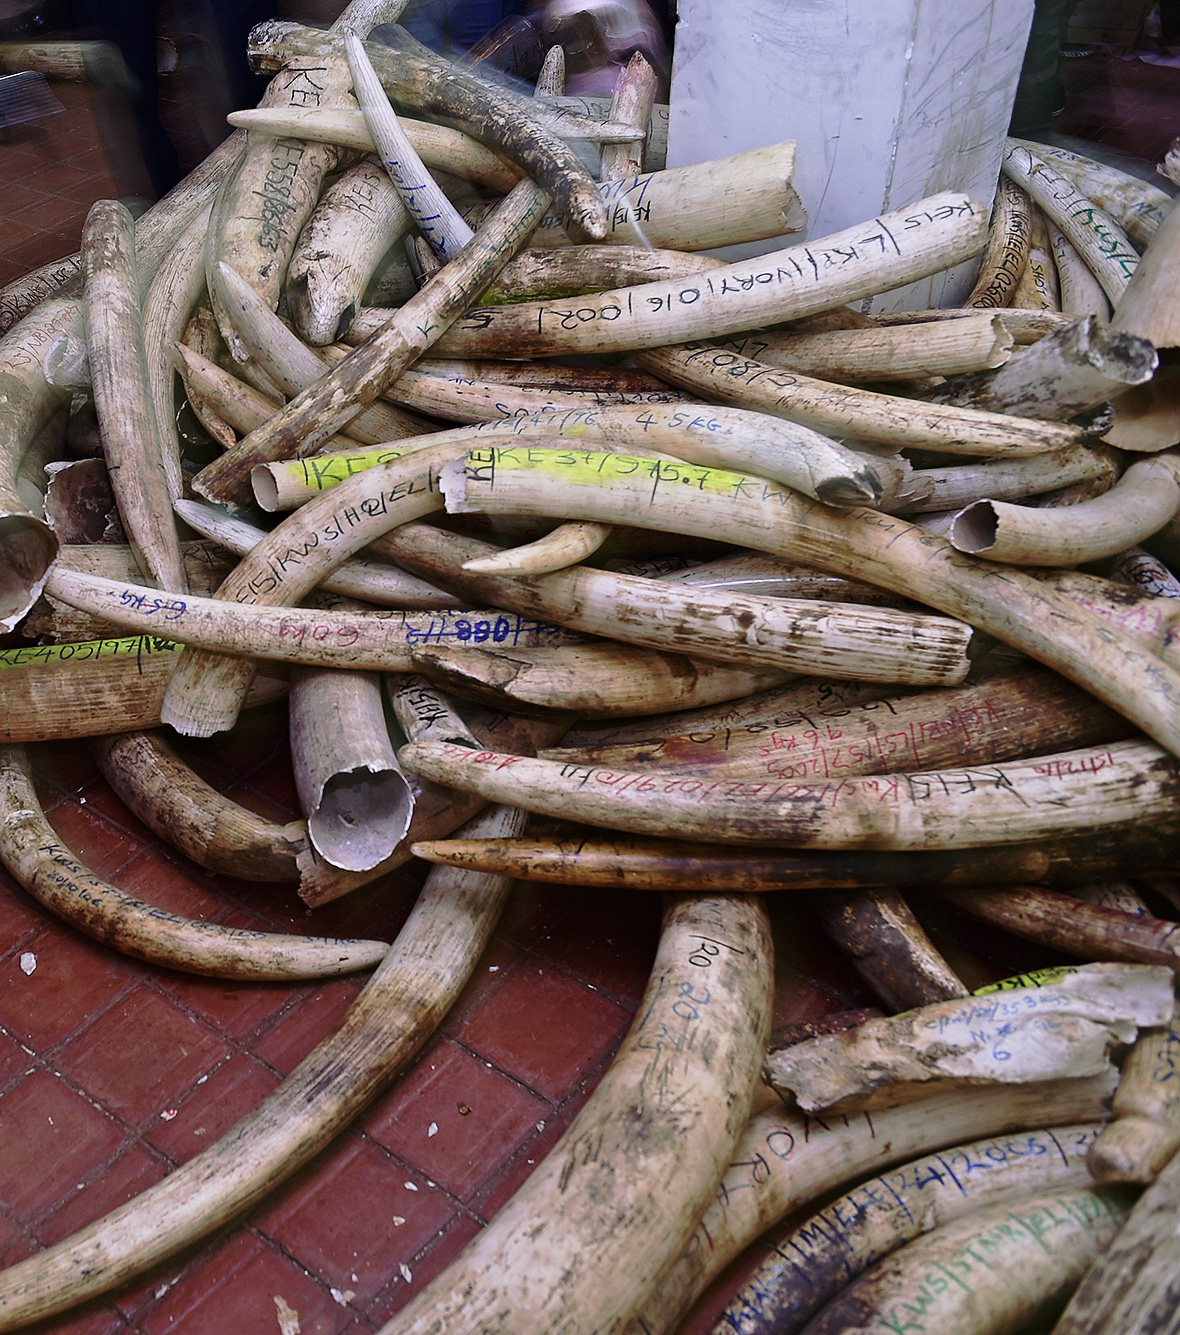 Kenya Ivory